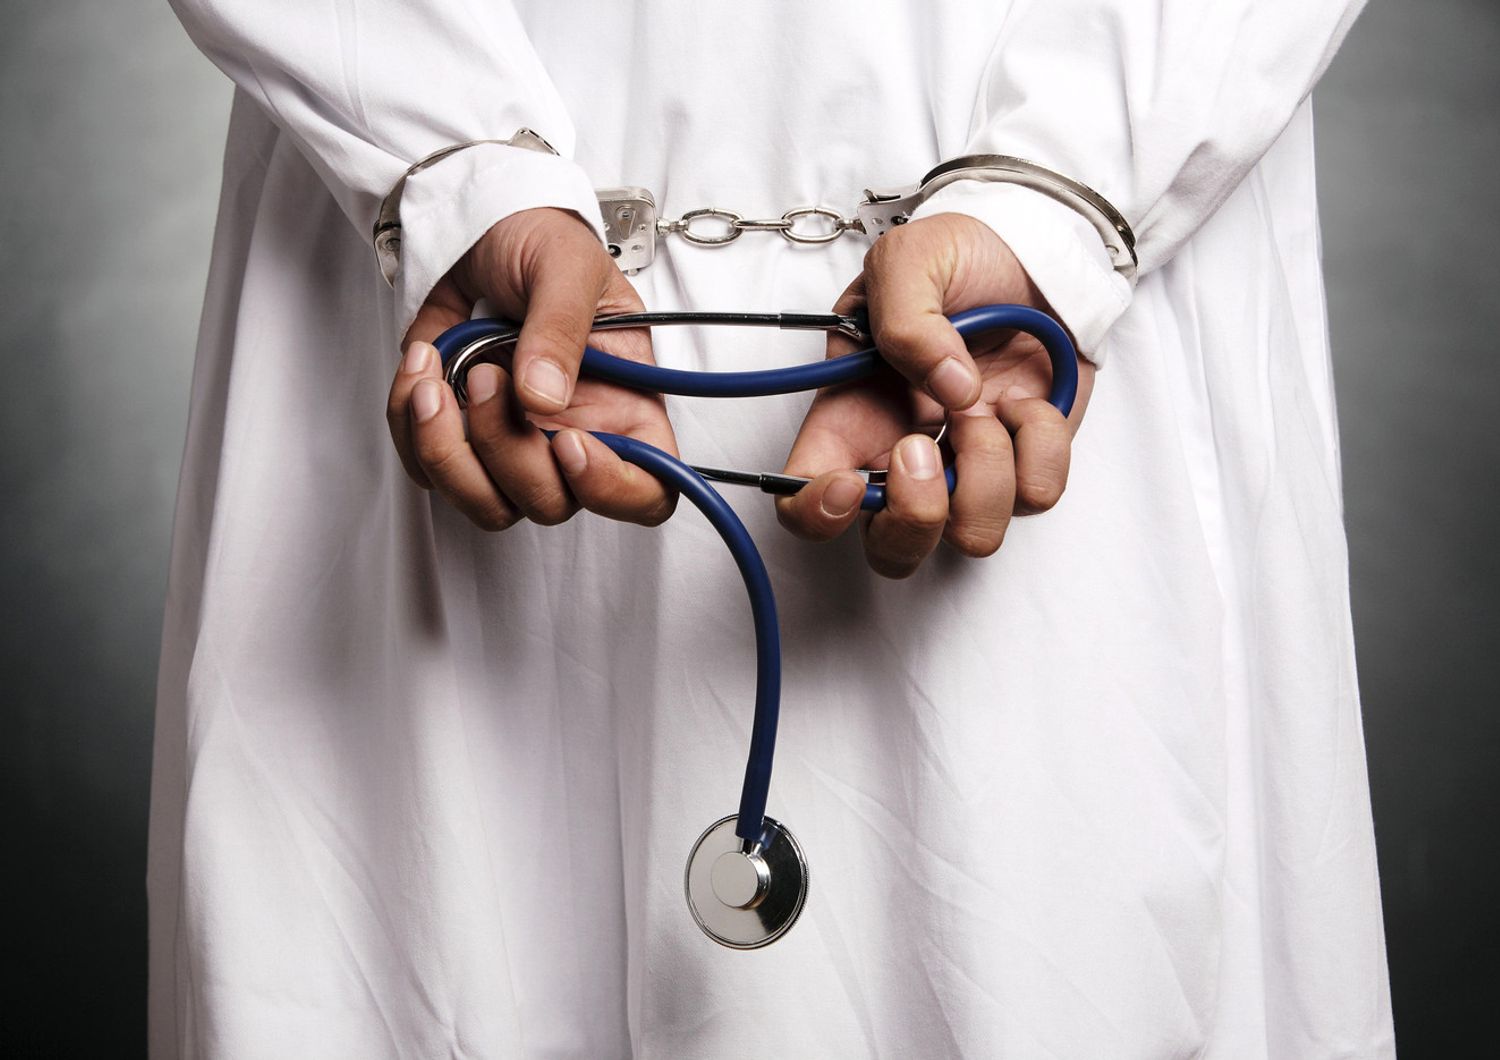 &nbsp;Medico arrestato medici arrestati in manette - agf